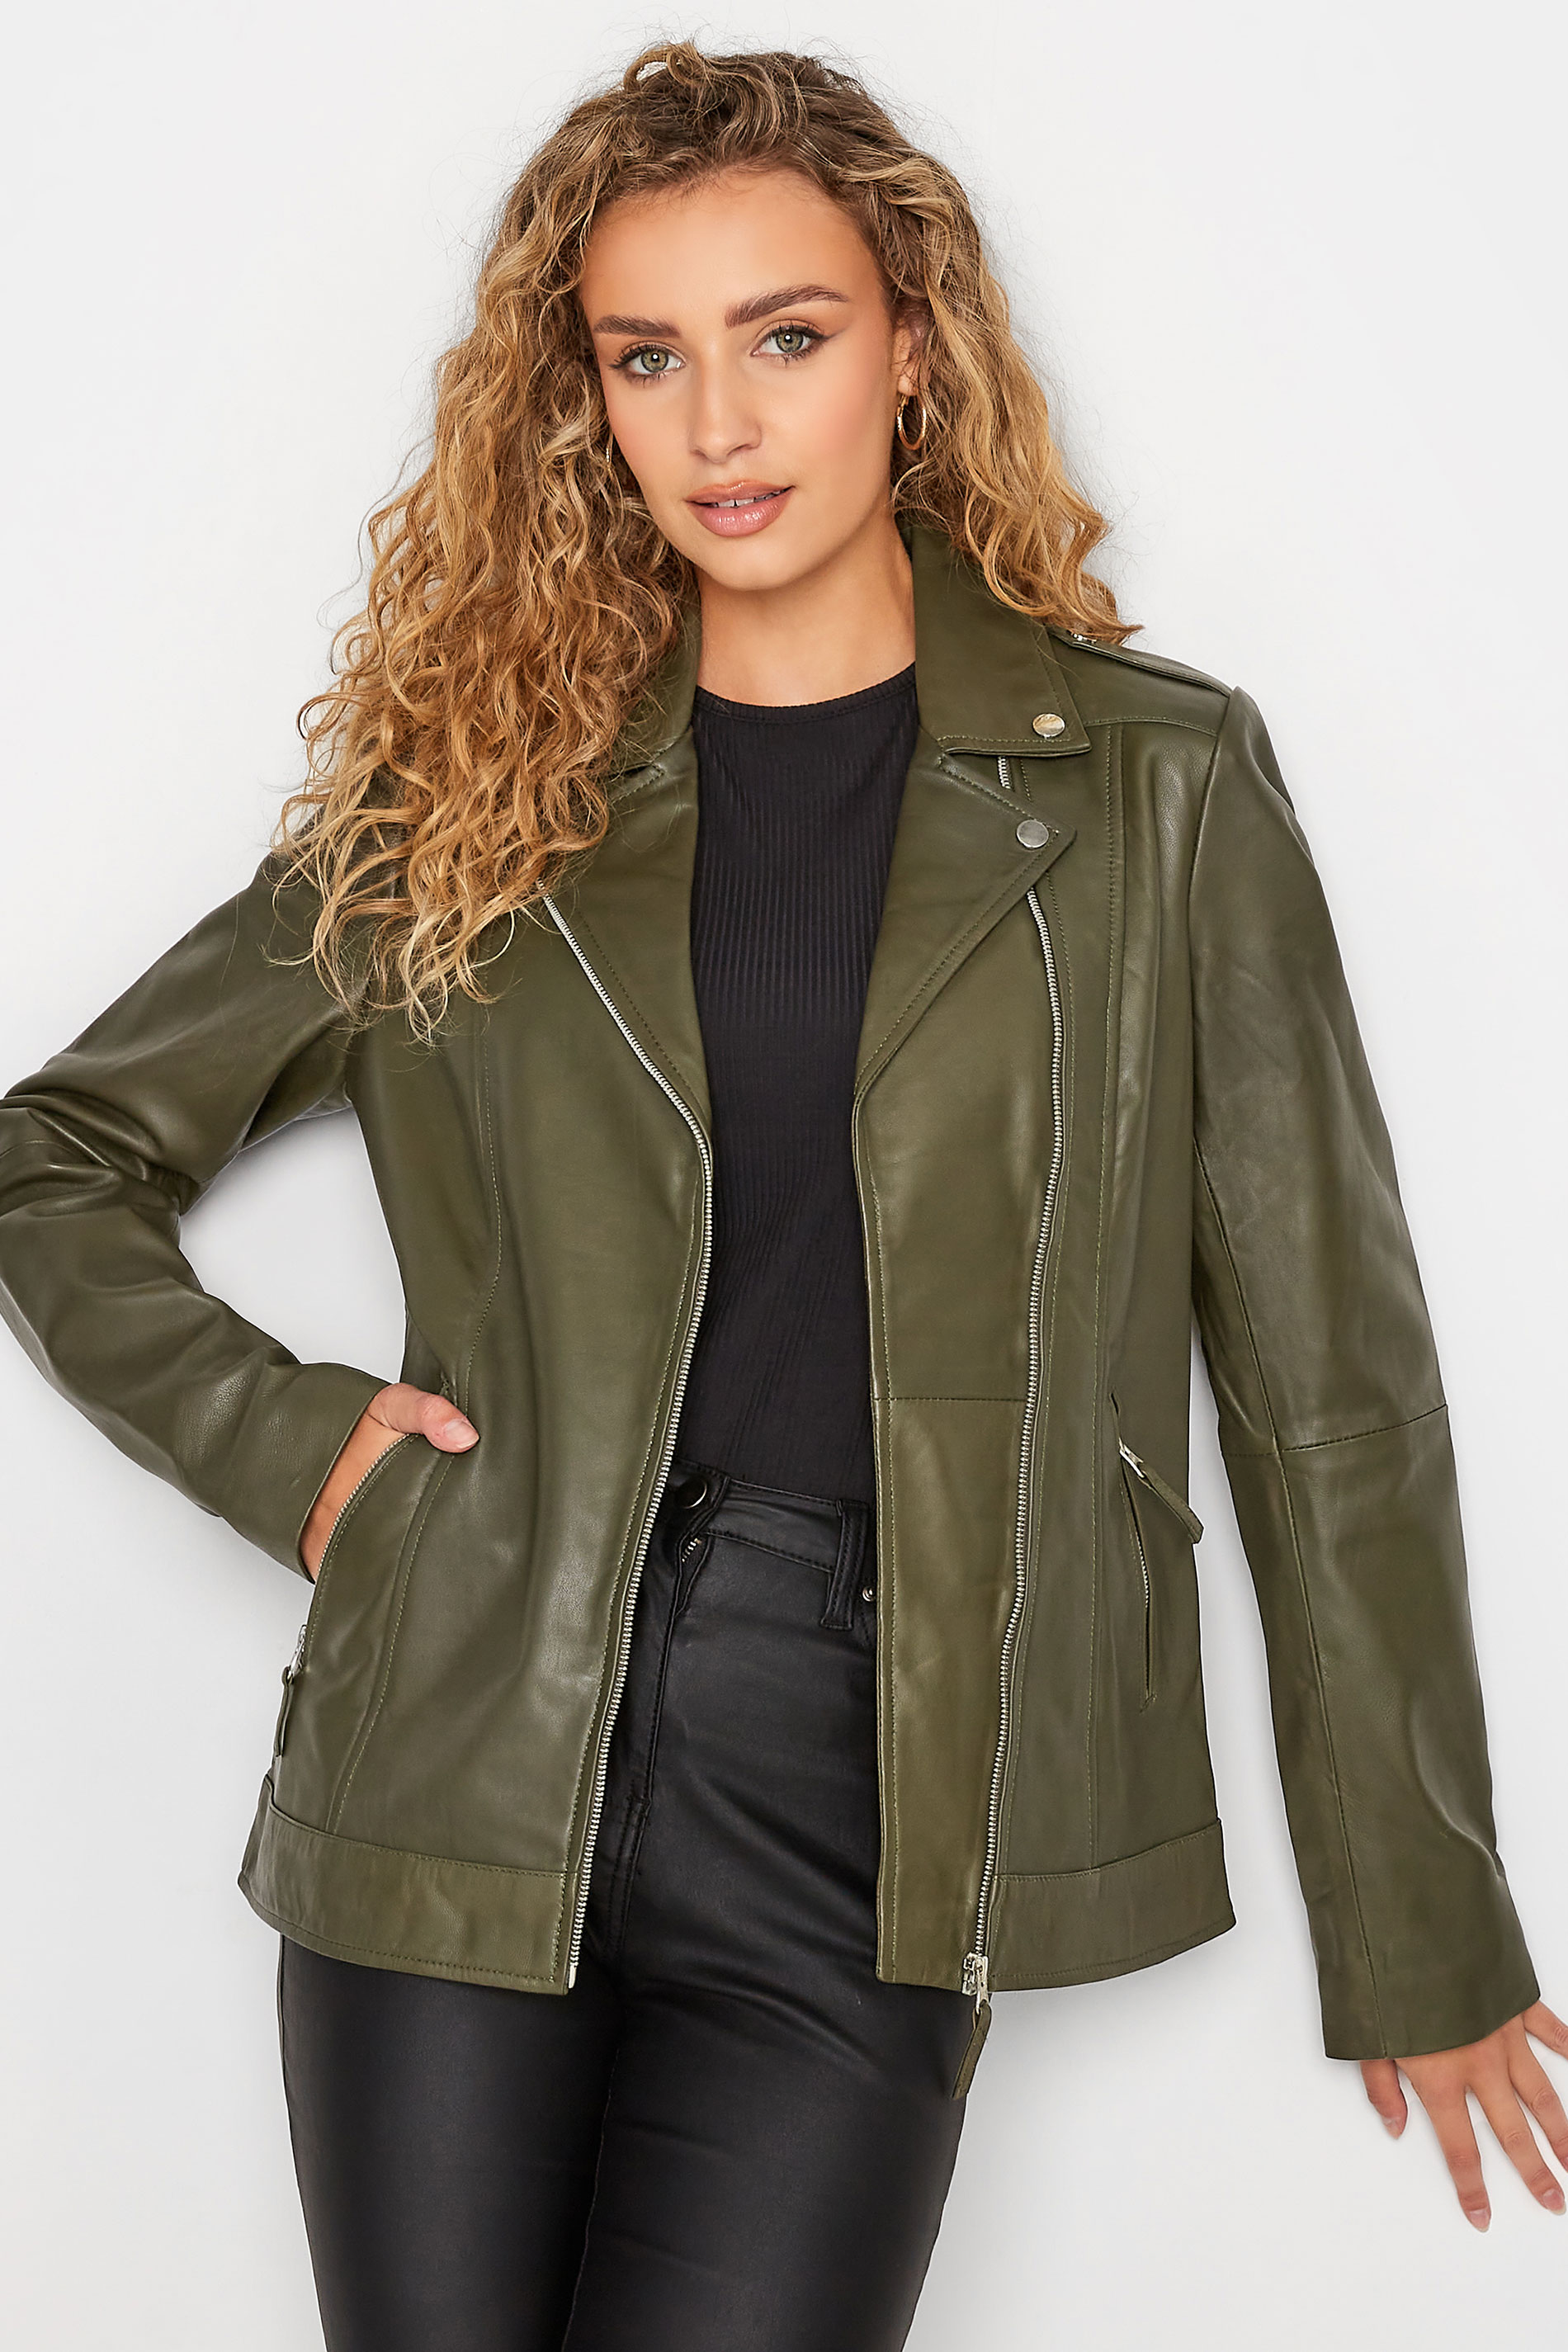 LTS Tall Women's Khaki Green Leather Biker Jacket | Long Tall Sally 1